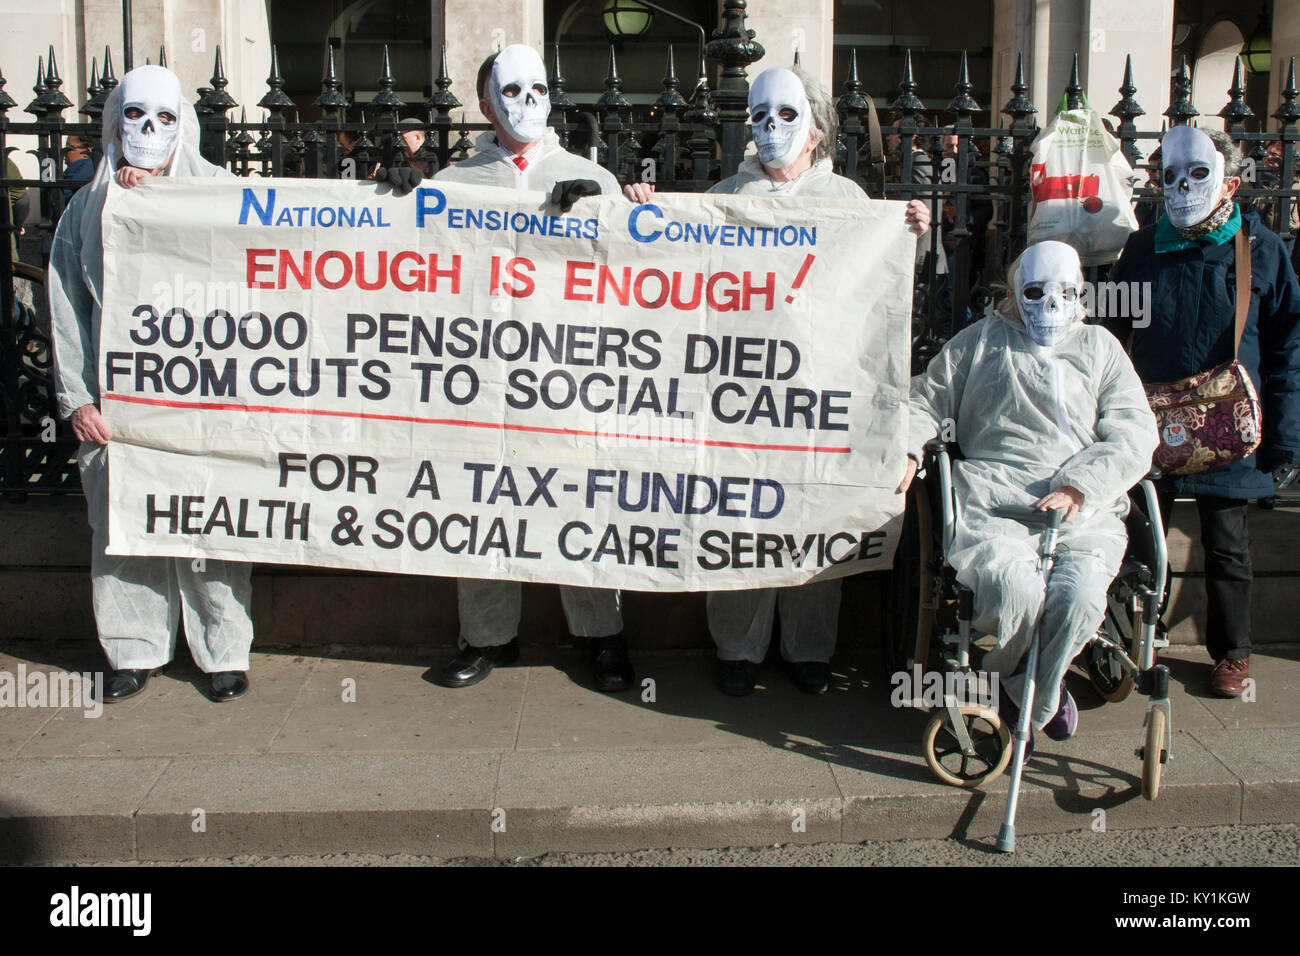 Grupo de pensionistas protestan vestidos como cadáveres o esqueletos con el lema "30K pensionistas murió de recortes a socail care' de Londres Foto de stock